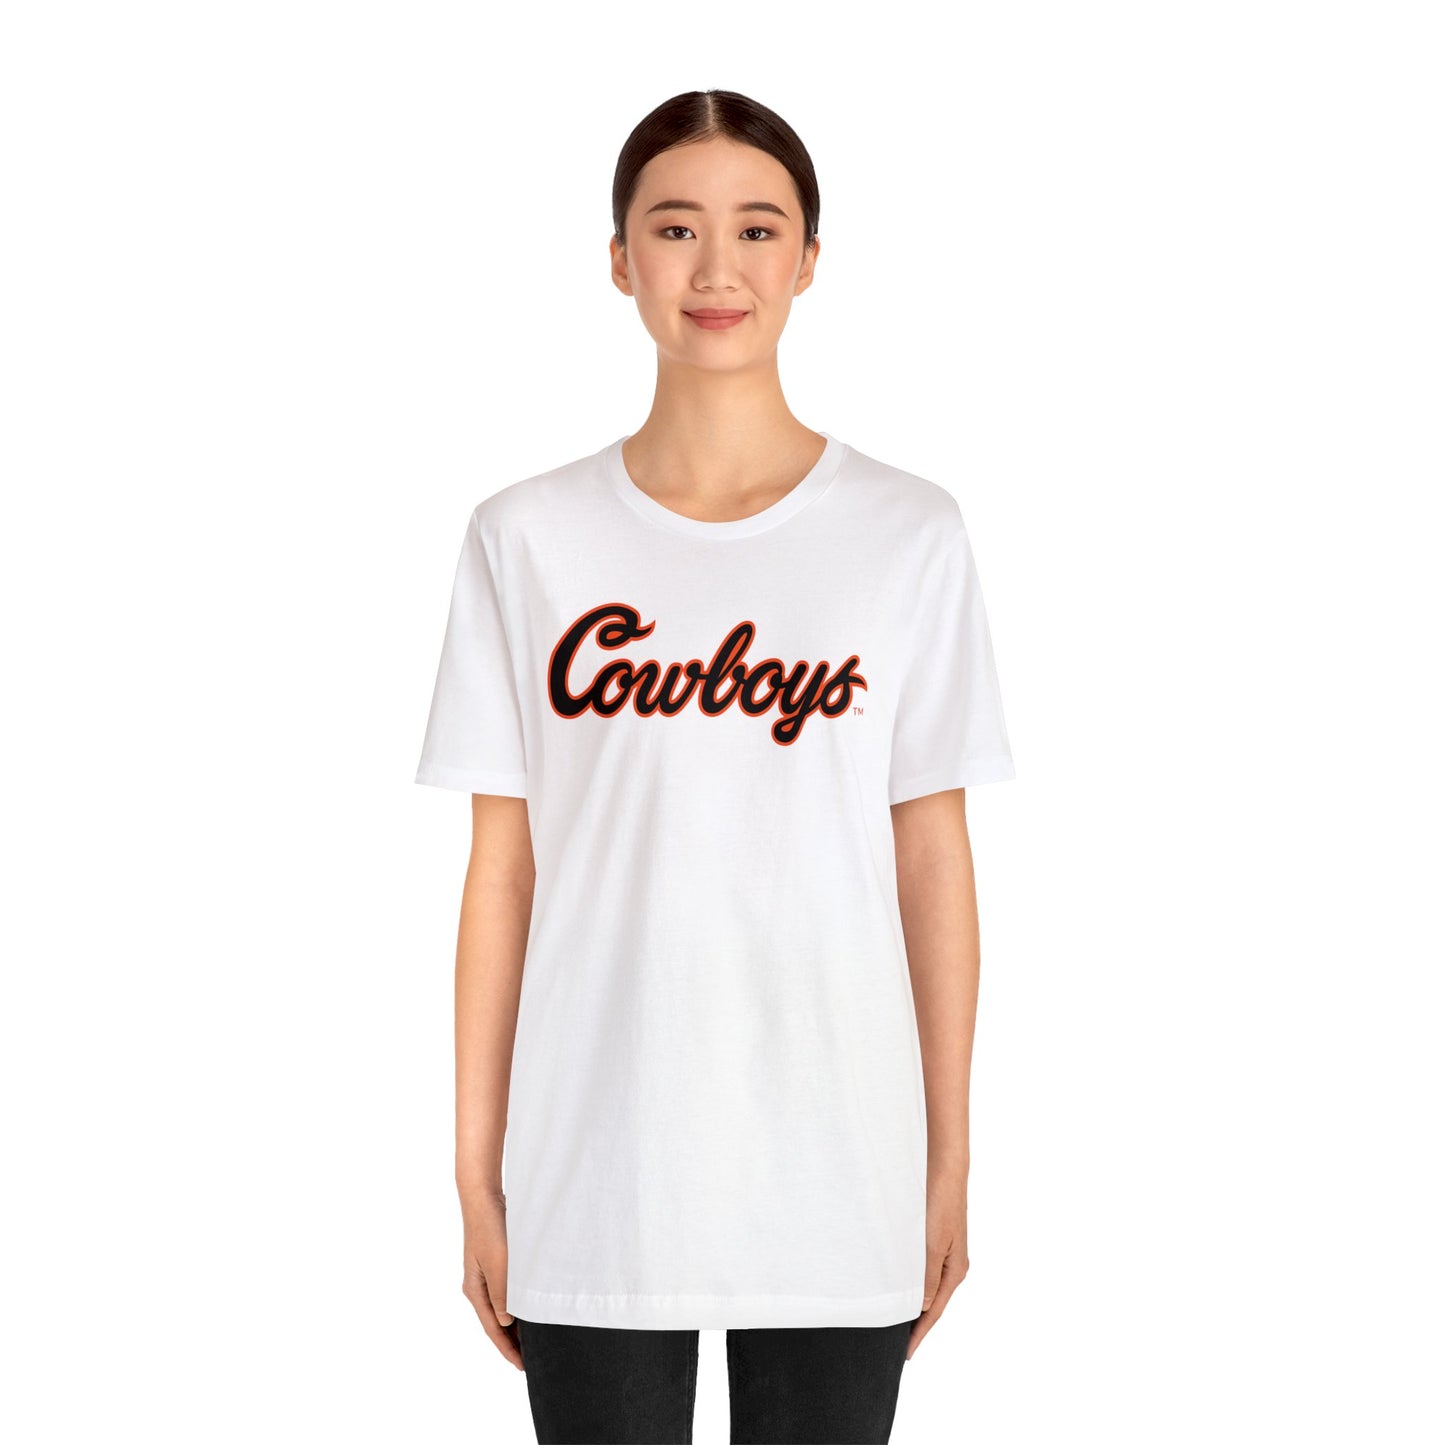 Jake Schultz #38 Cursive Cowboys T-Shirt